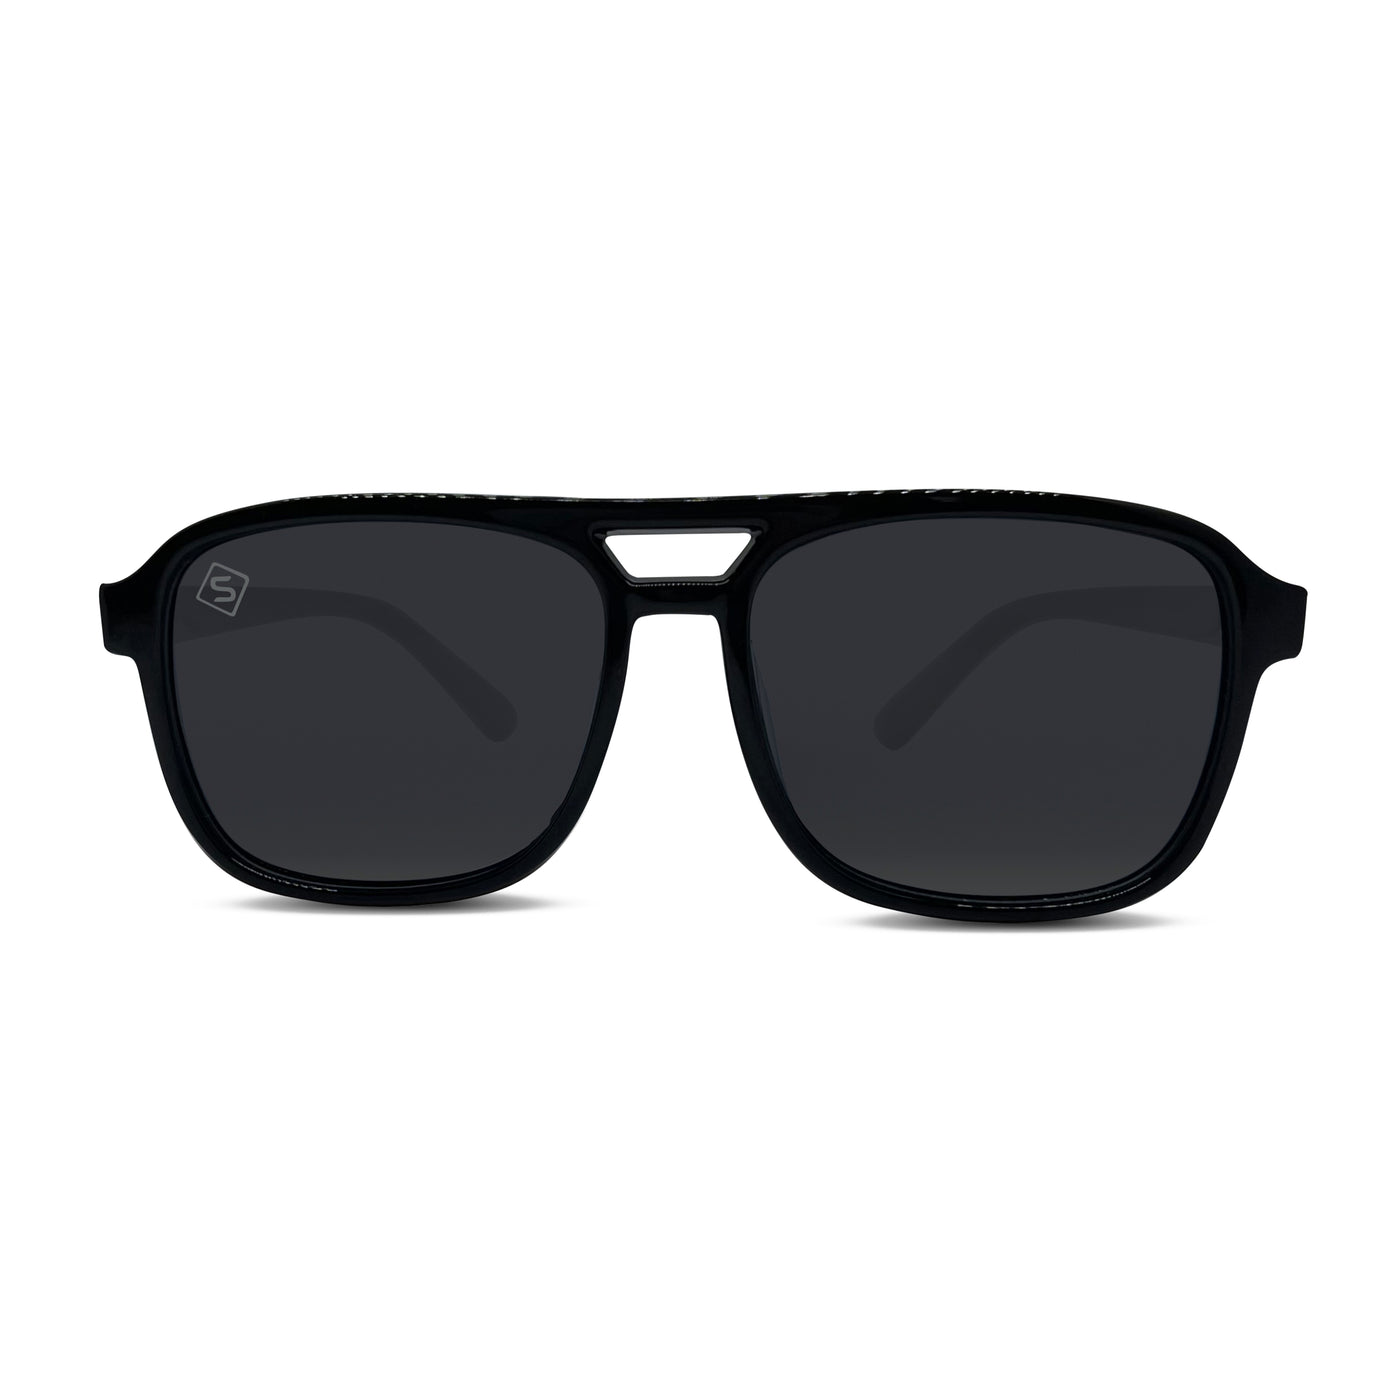 SATURDAZE Optics polarized kids black frame sunglasses - COOL KID ON THE BLOCK